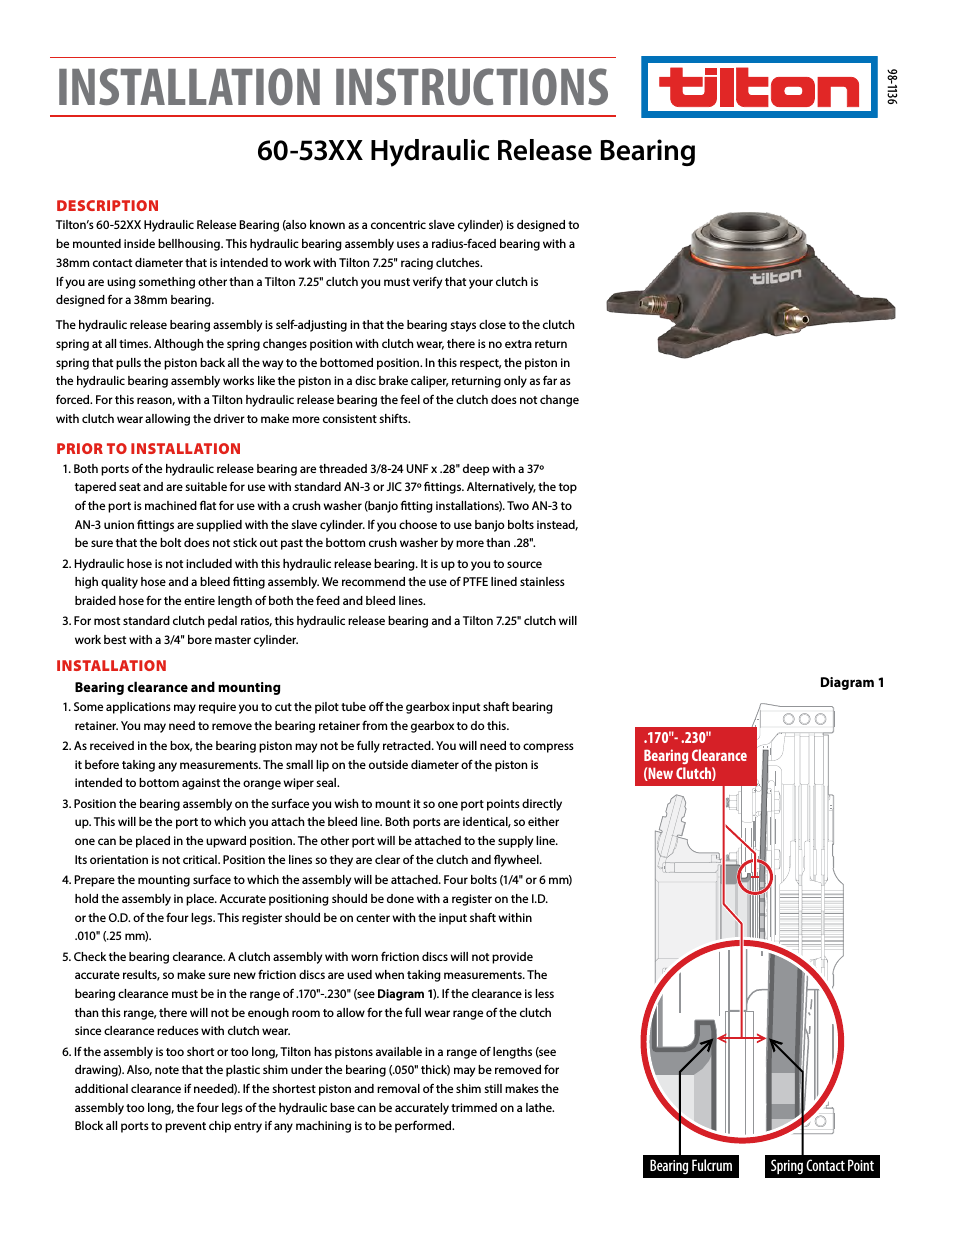 53XX Hydraulic Release Bearing (98-1136)